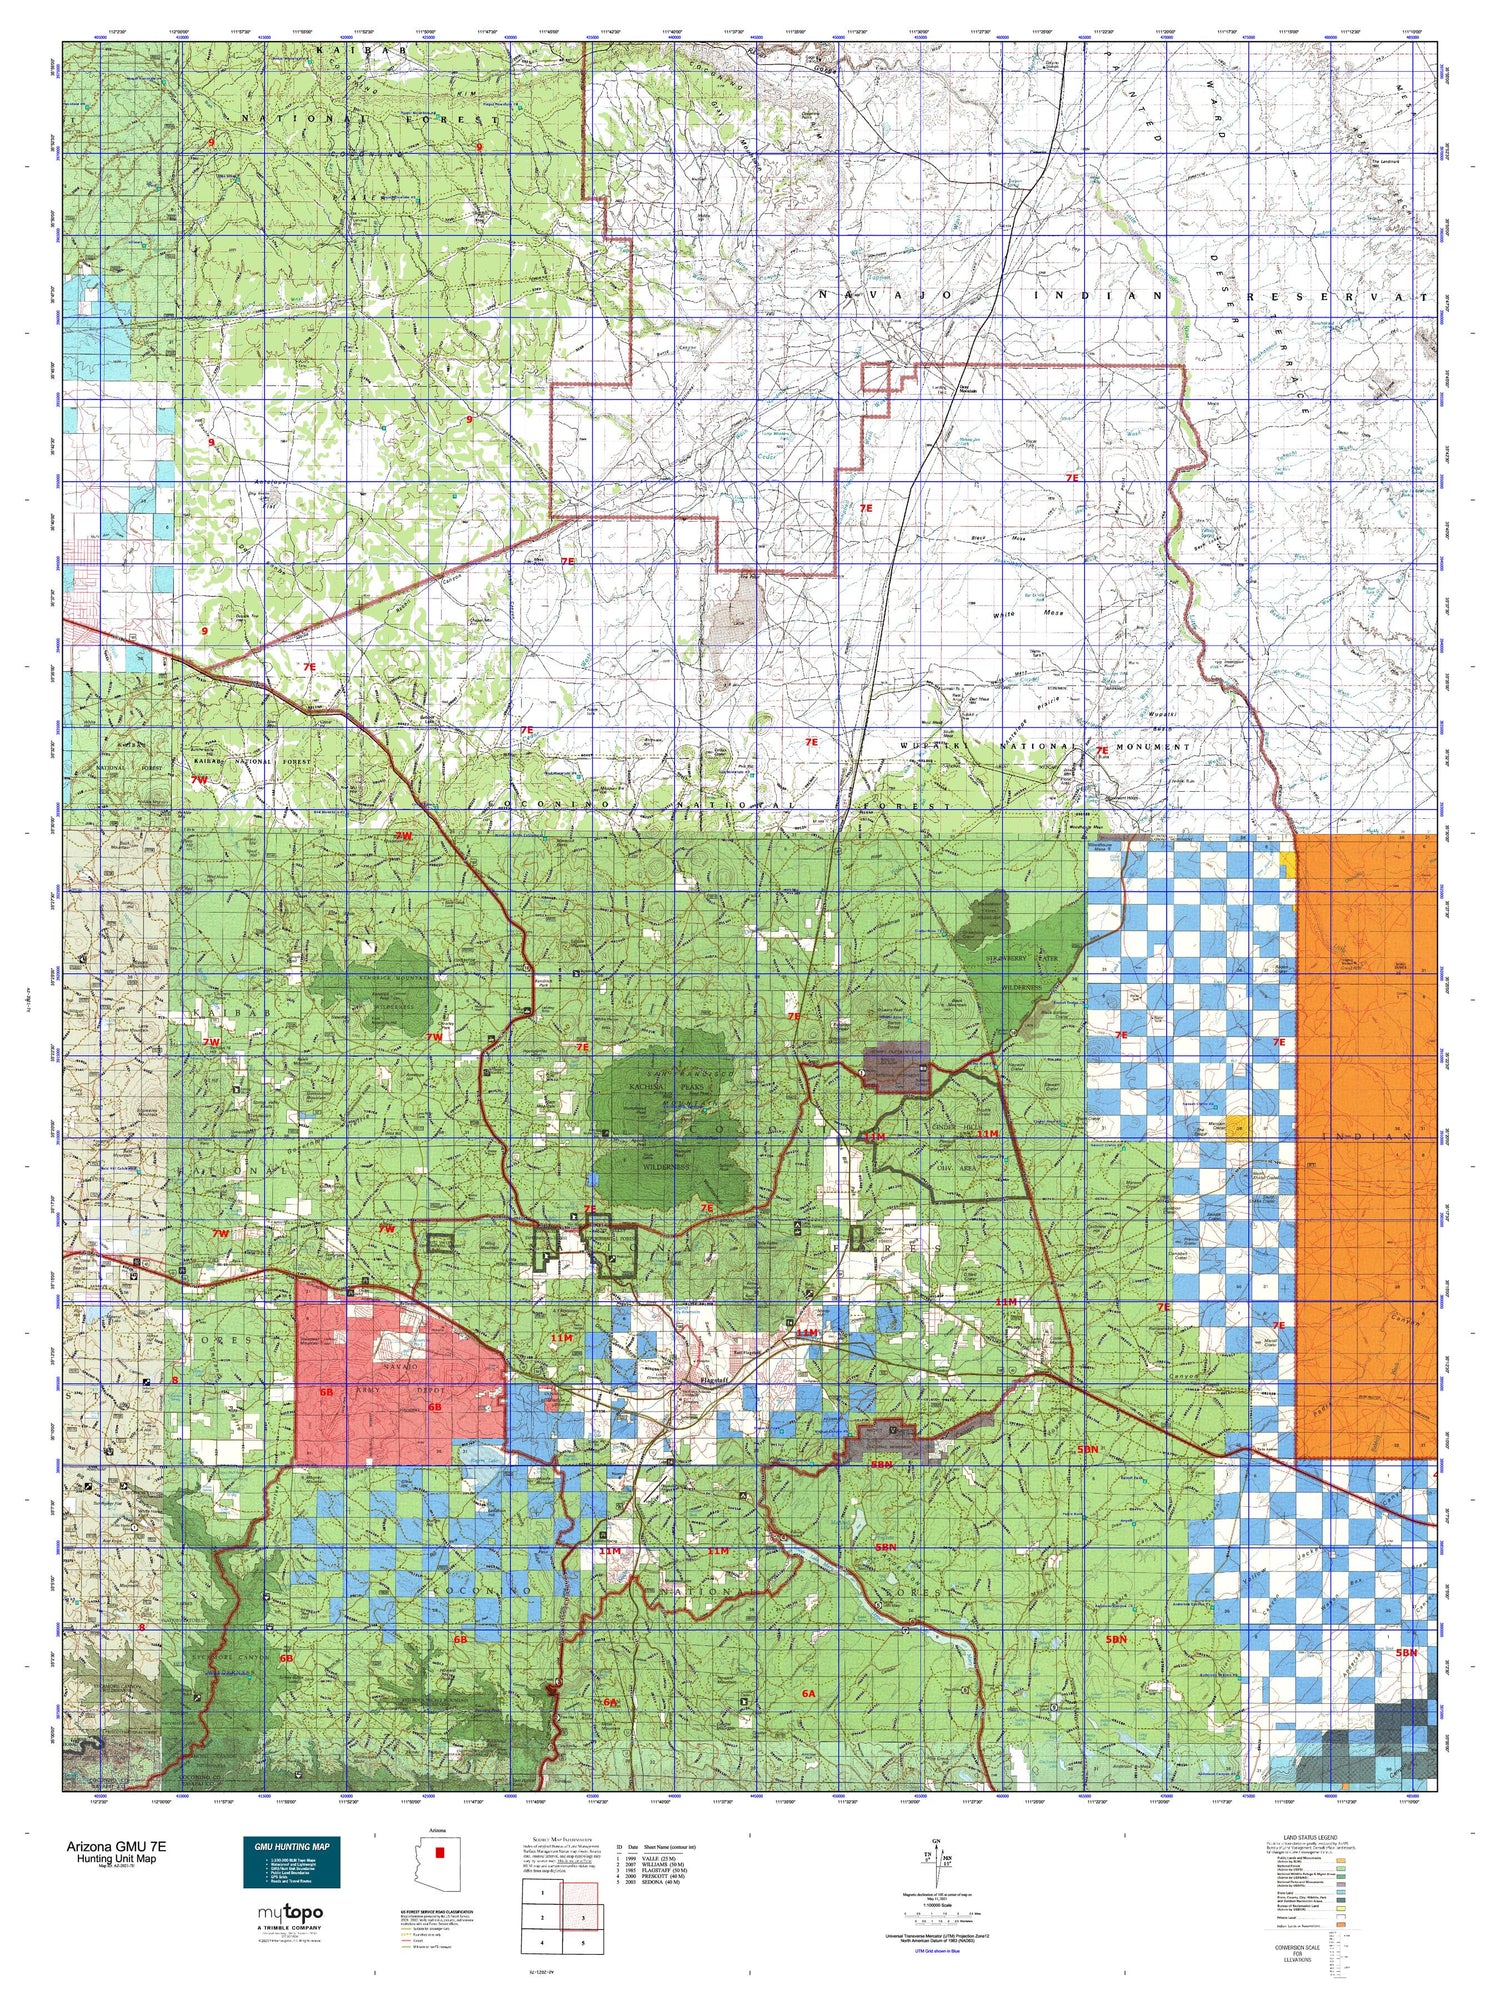 Arizona GMU 7E Map Image